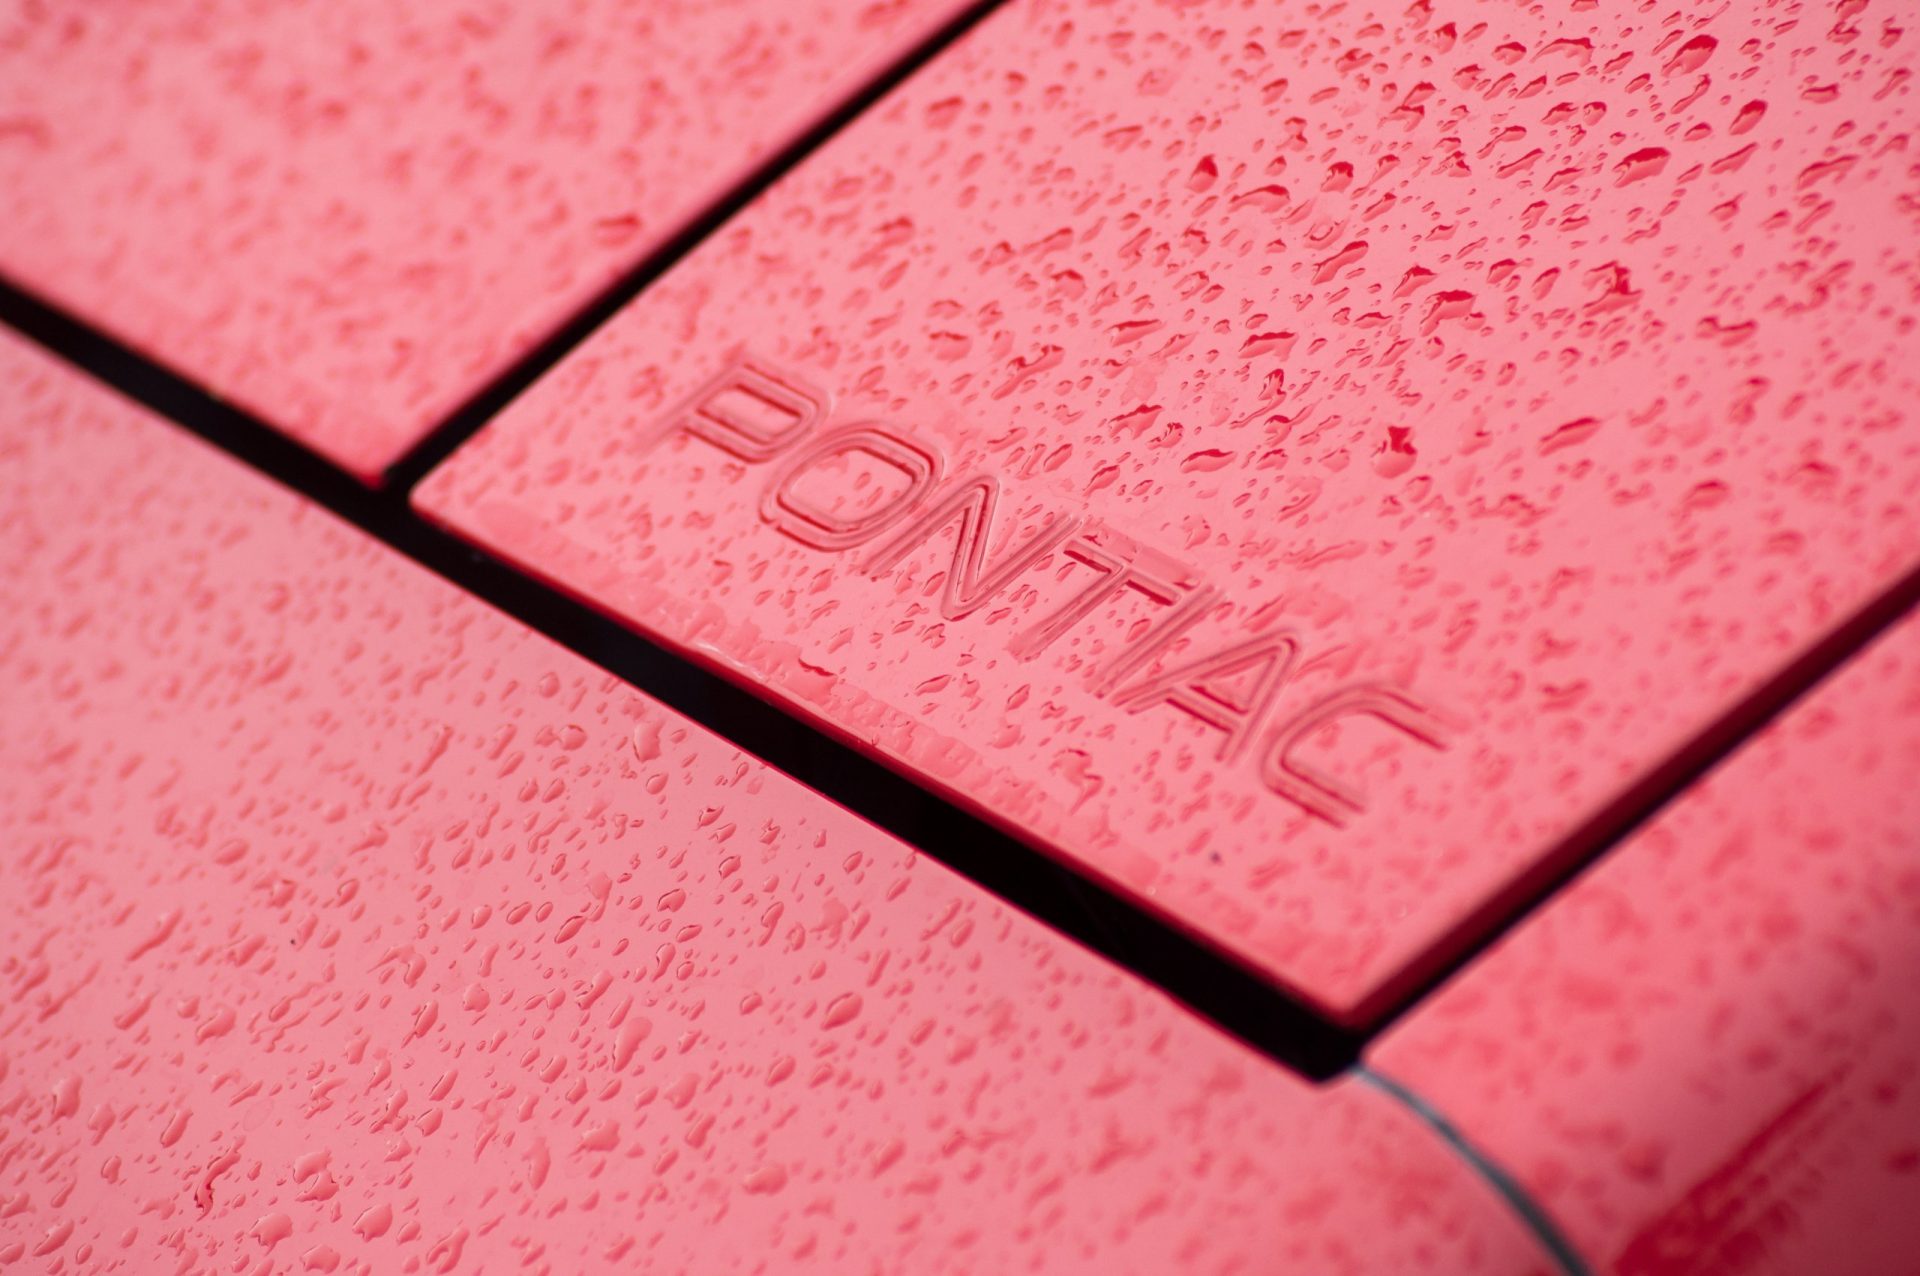  Closeup of rain drops on Pontiac logo on vintage car at fun car show event